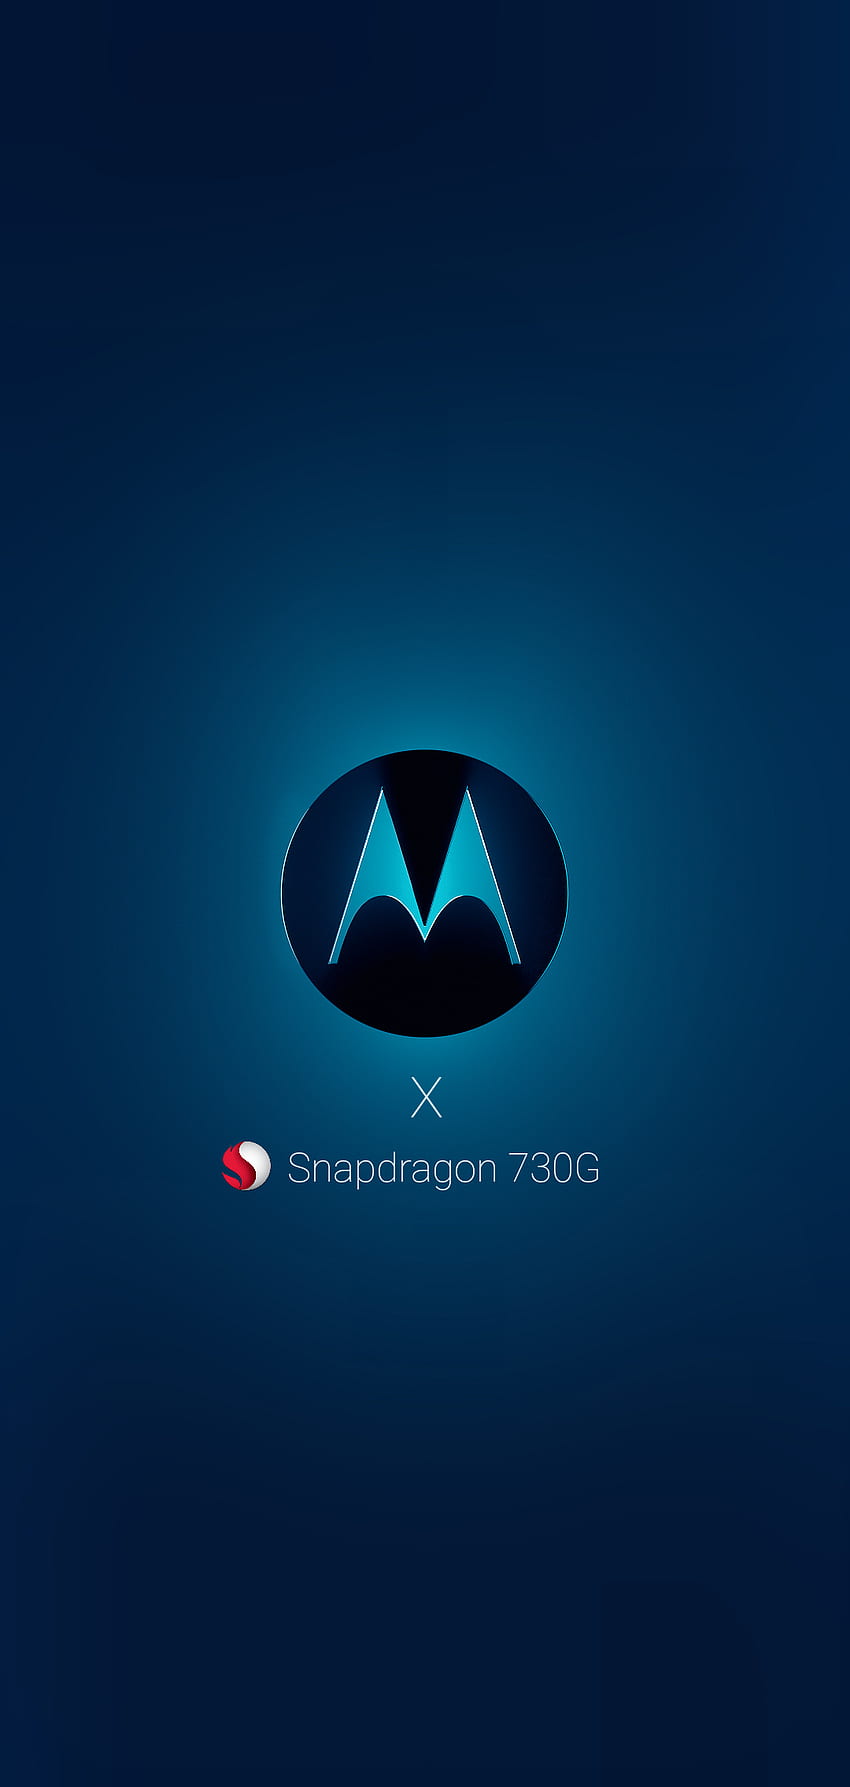 Motorola x Snapdragon, 730g wallpaper ponsel HD